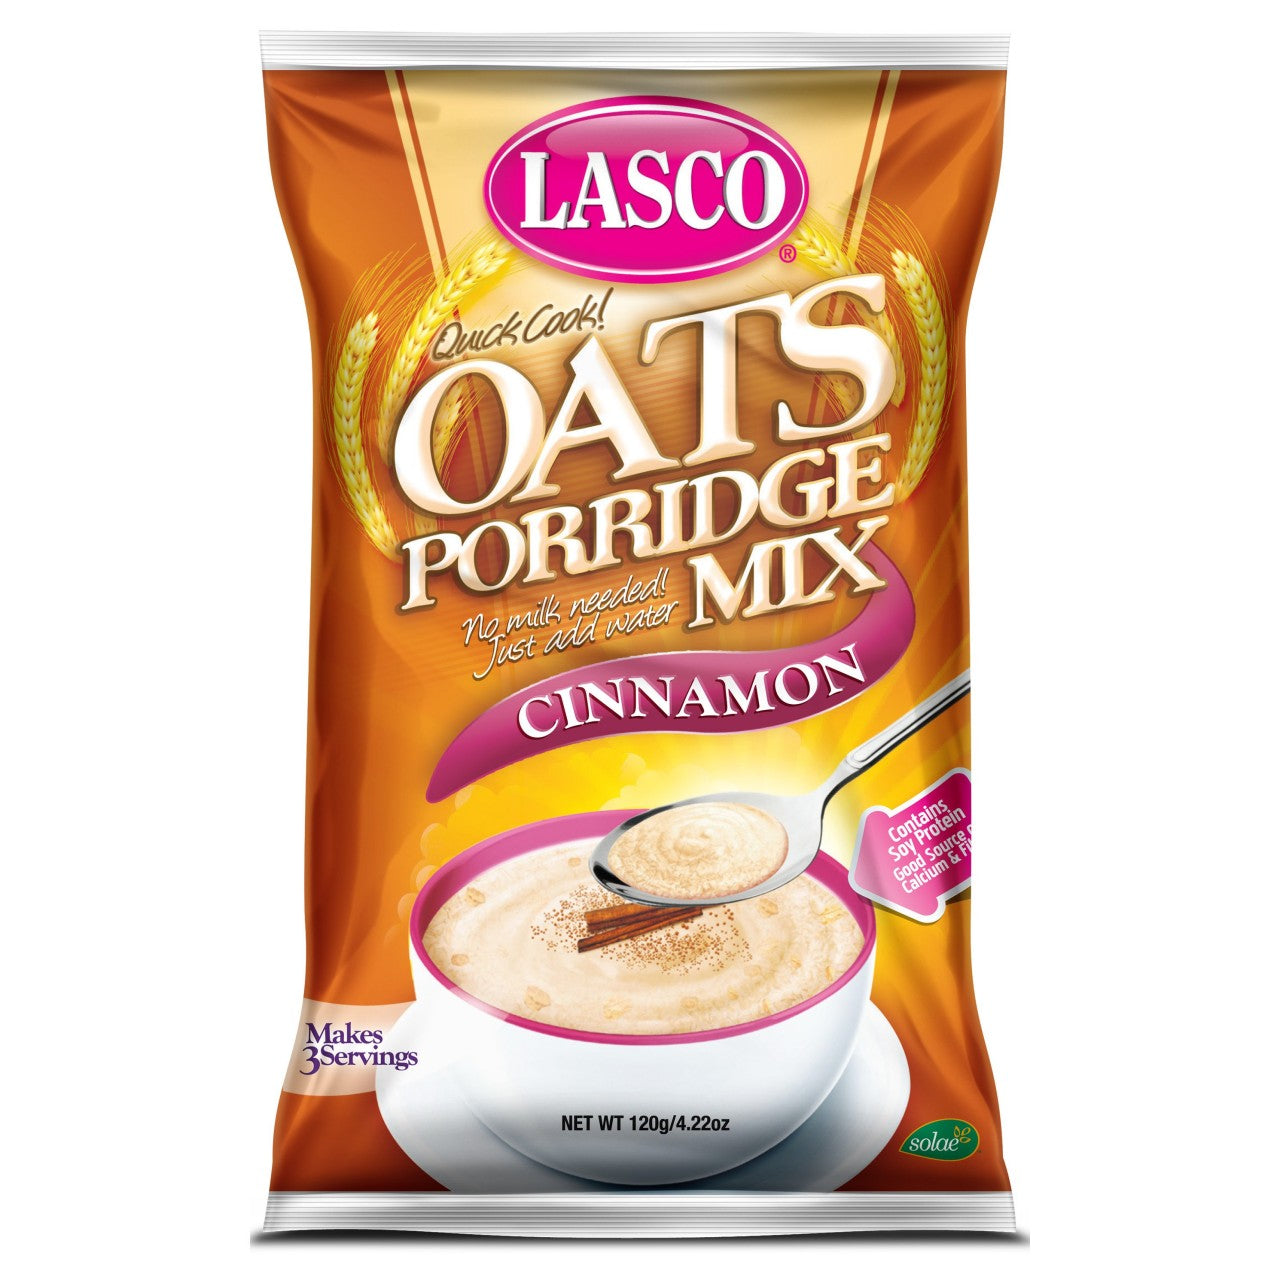 Lasco Oats Porridge (120g)